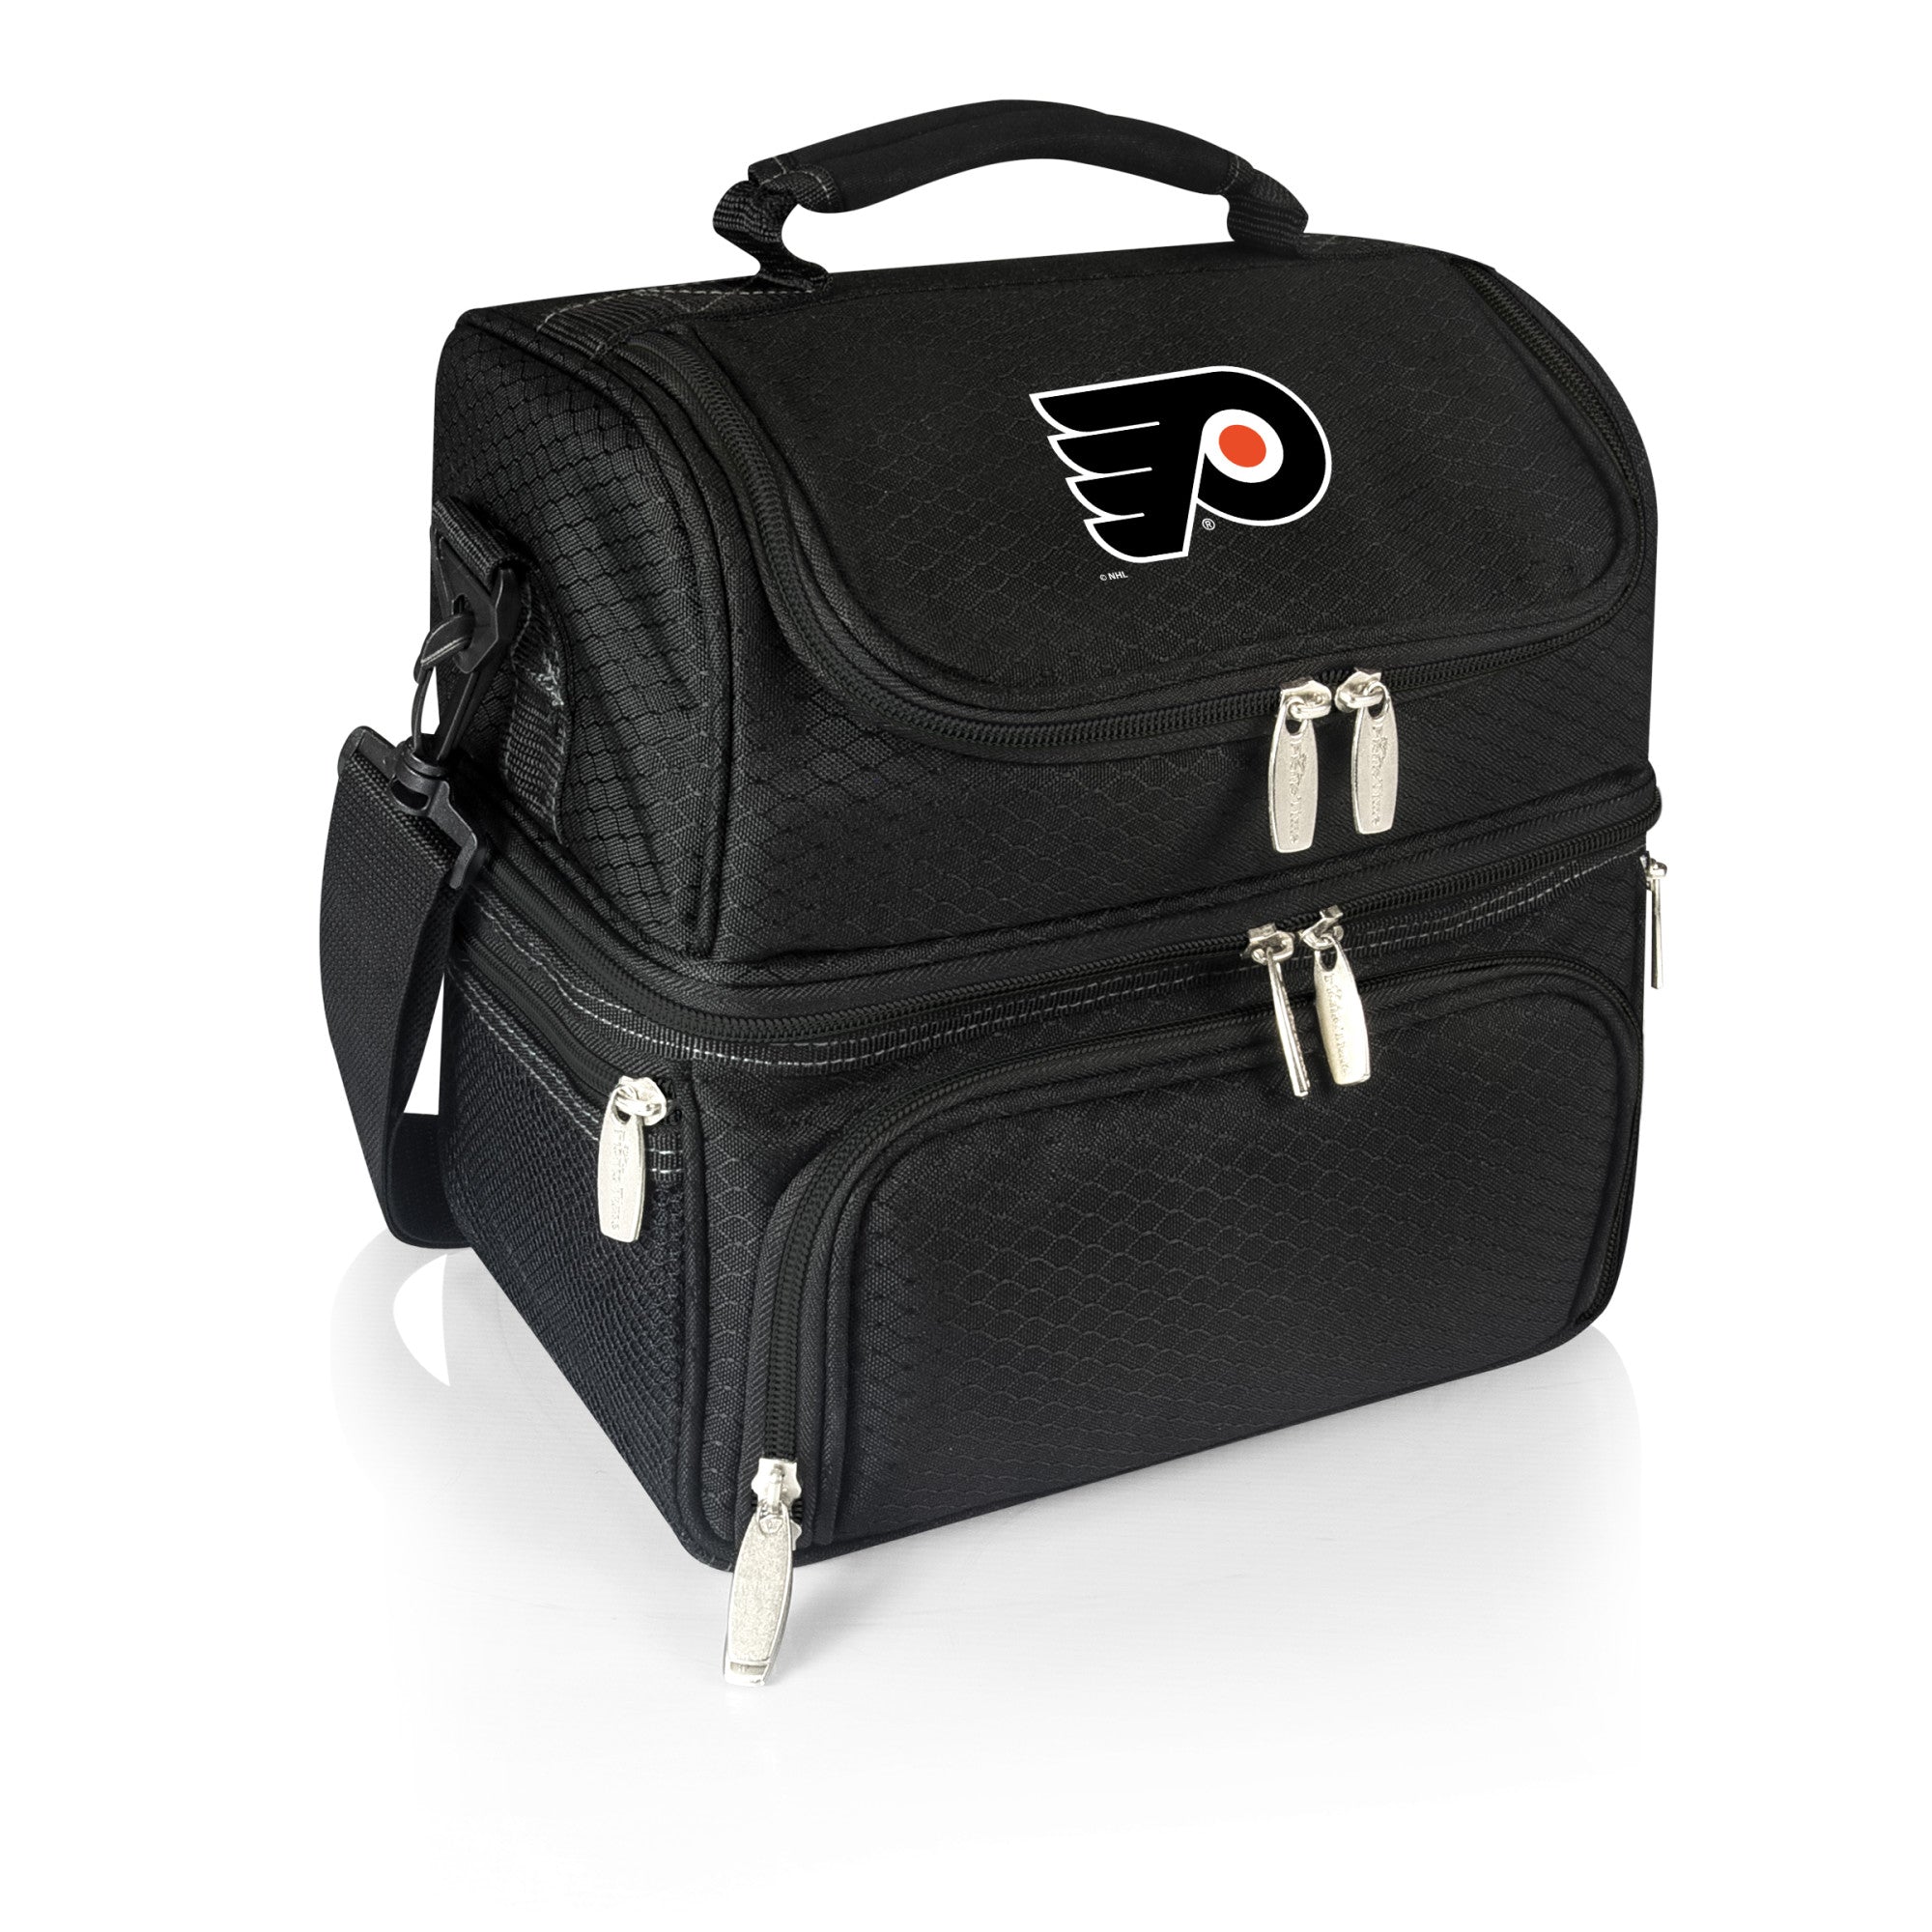 Philadelphia Flyers - Pranzo Lunch Bag Cooler with Utensils